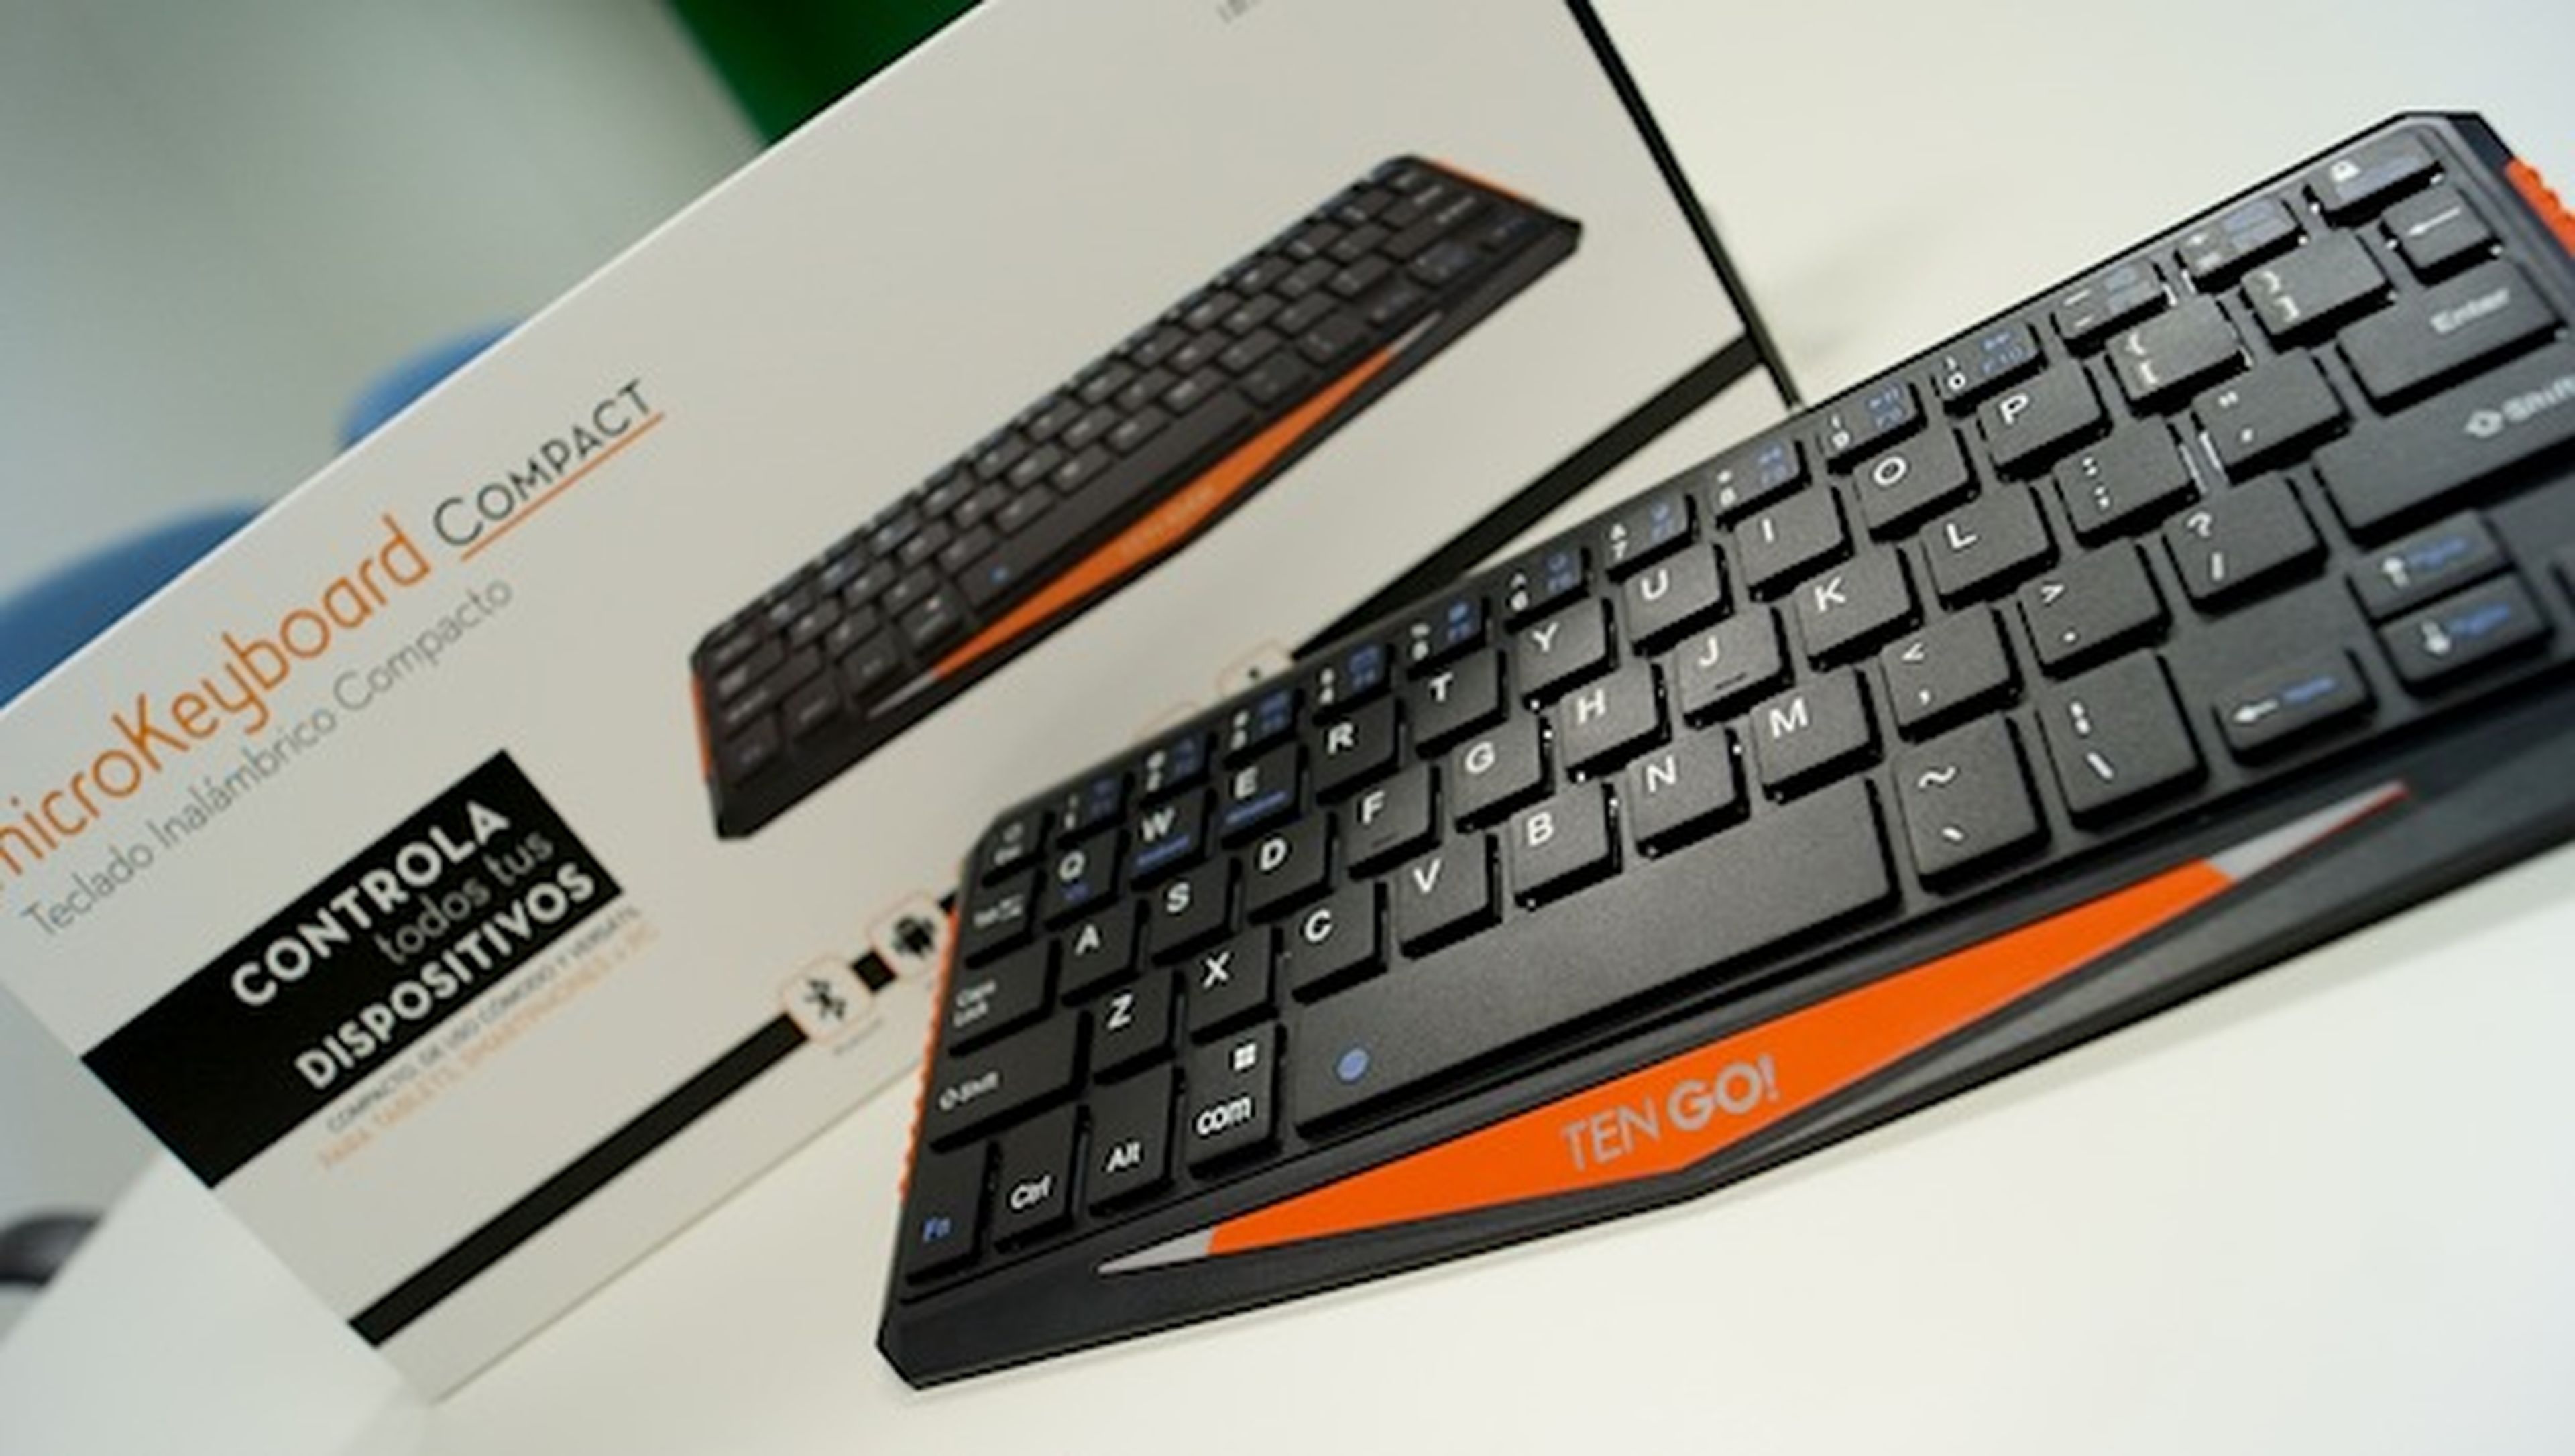 TenGo! teclado bluetooth microKeyboard Compact